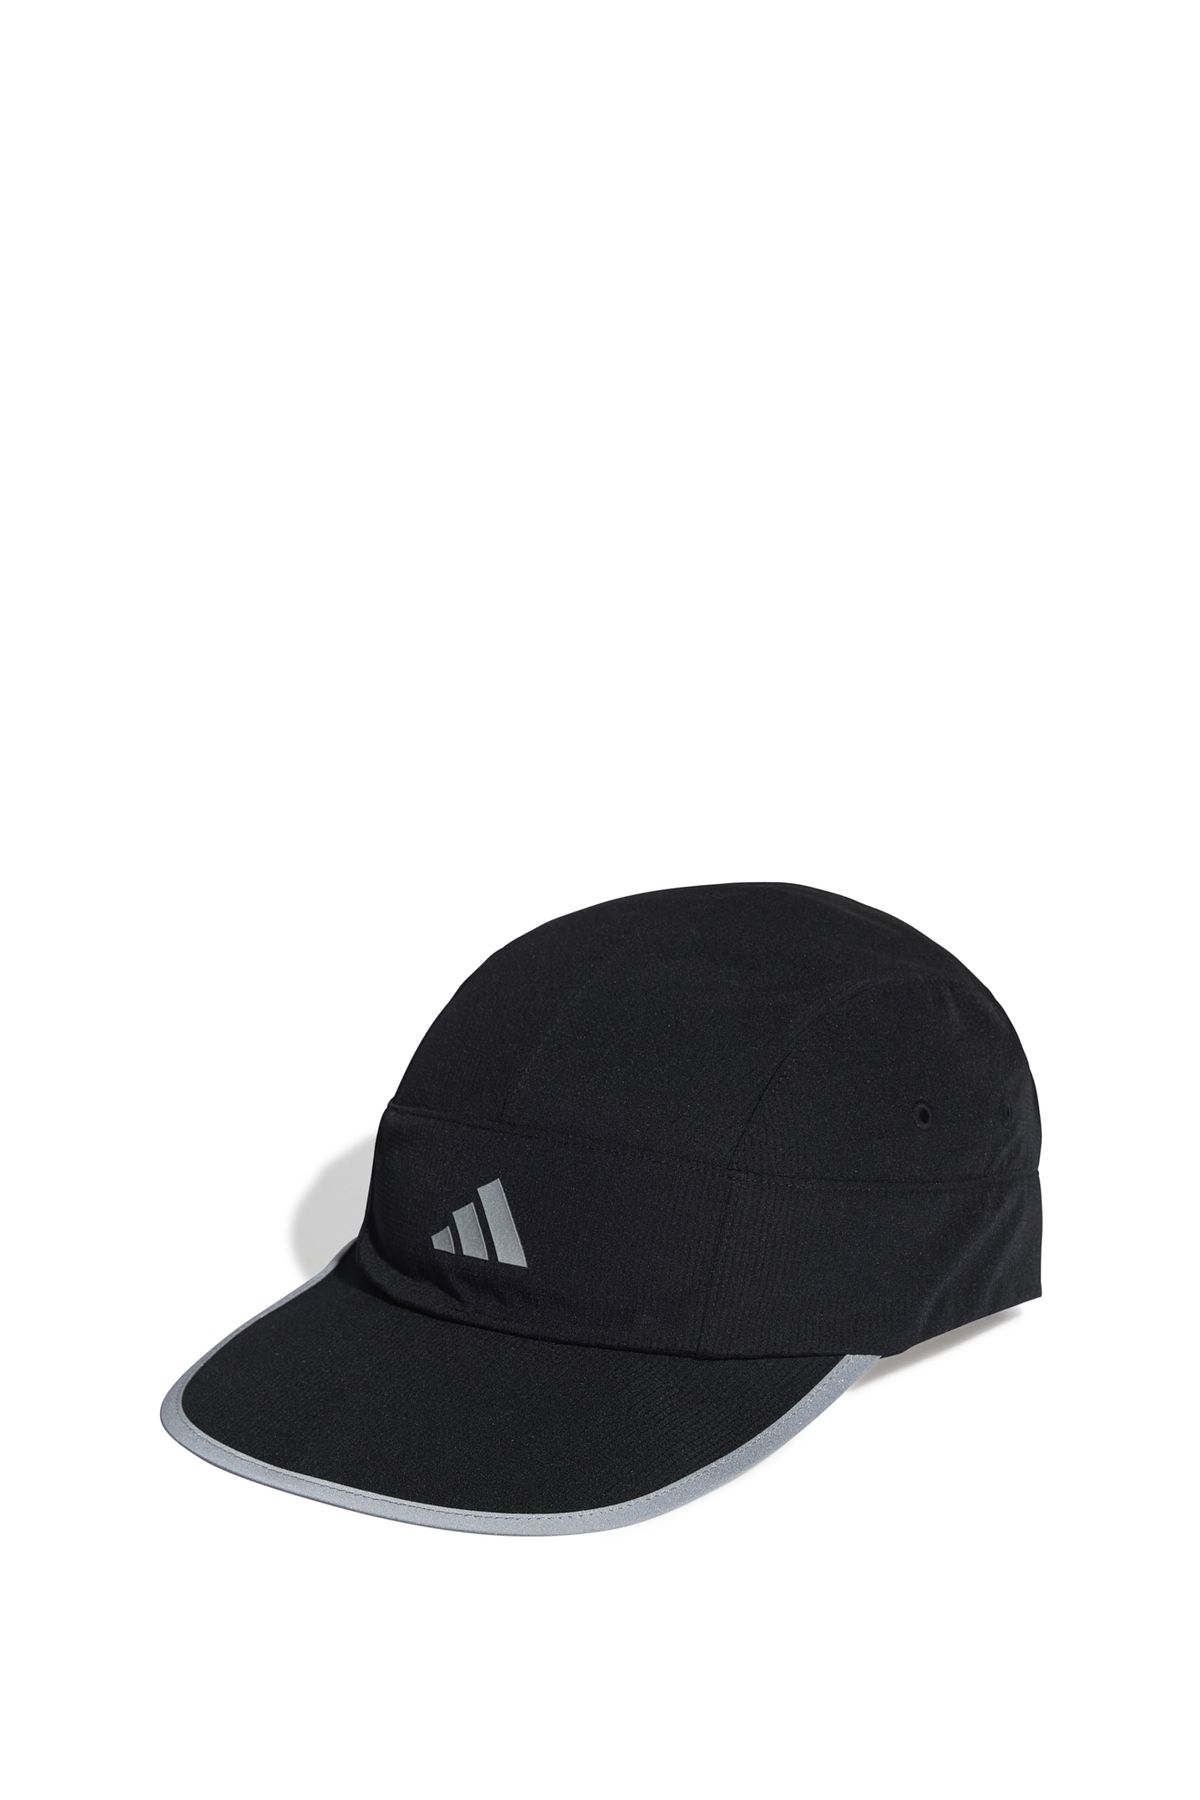 adidas کلاه سیاه یونیزکس ht4816 r